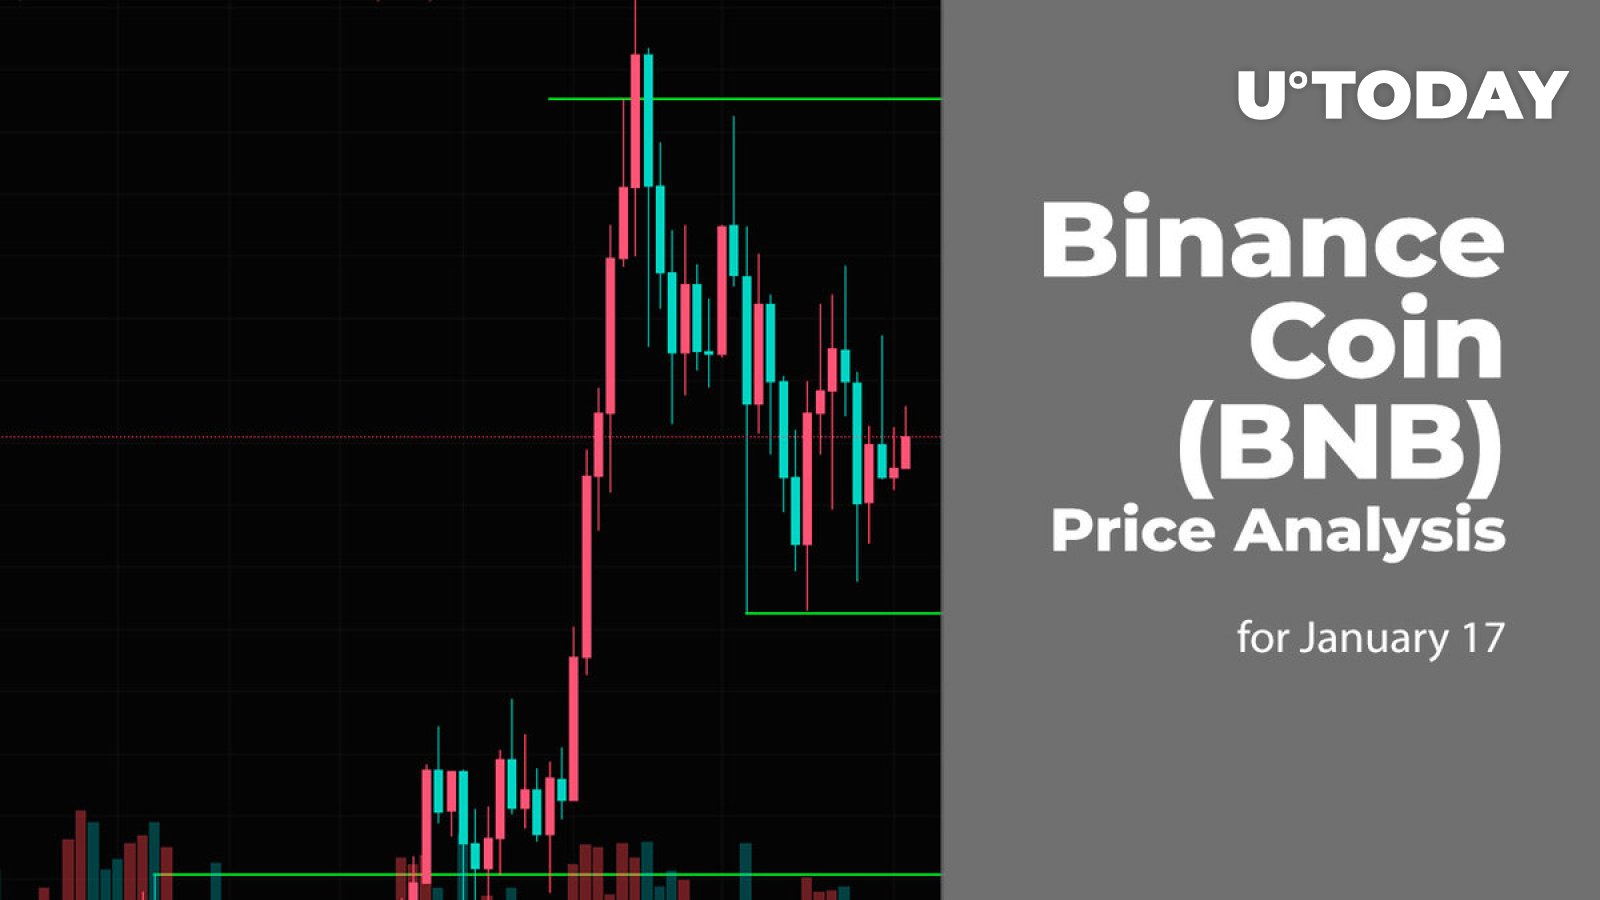 Binance Coin (BNB) Price Analysis for January 17